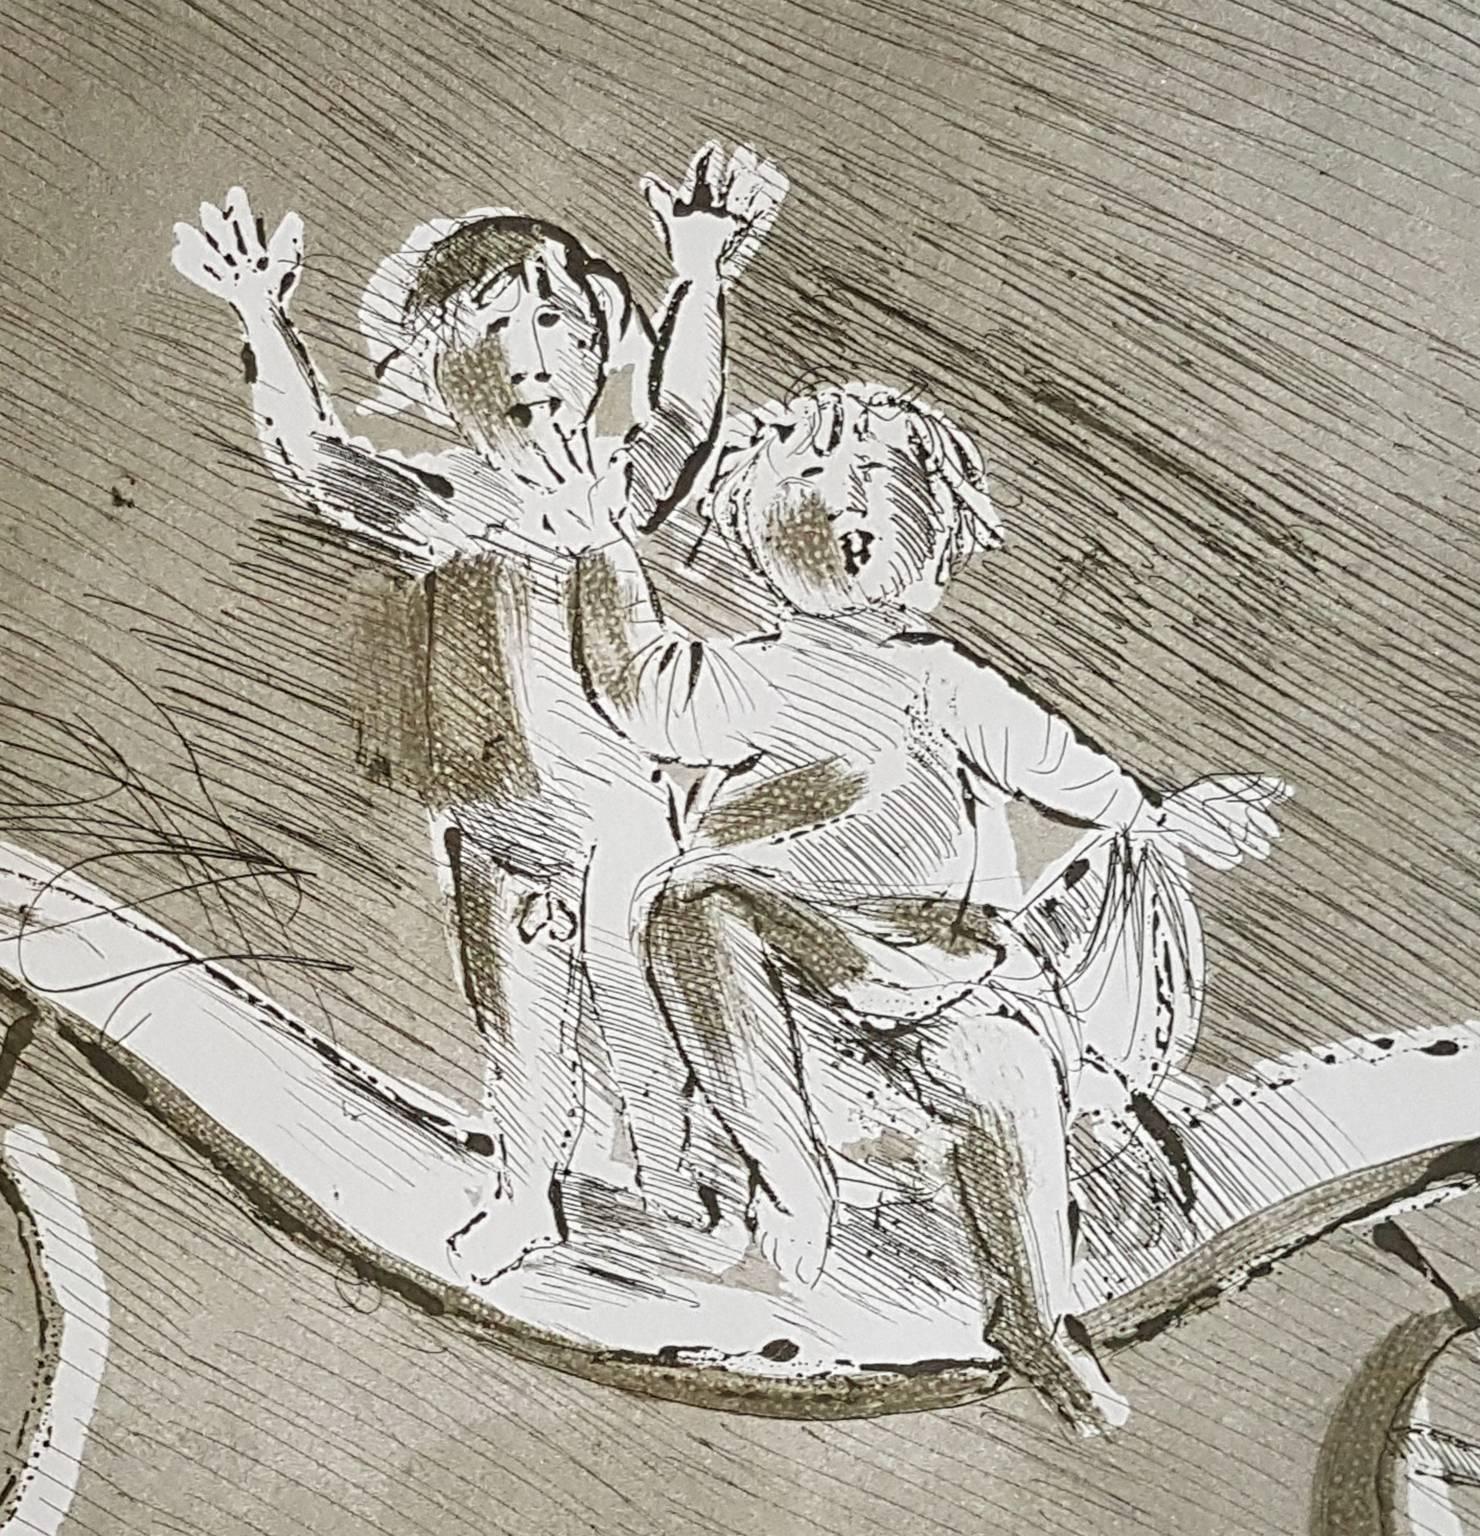 Mileto and Giulia in a Green Carriage - Original Etching by Giacomo Manzù - Modern Print by Giacomo Manzú